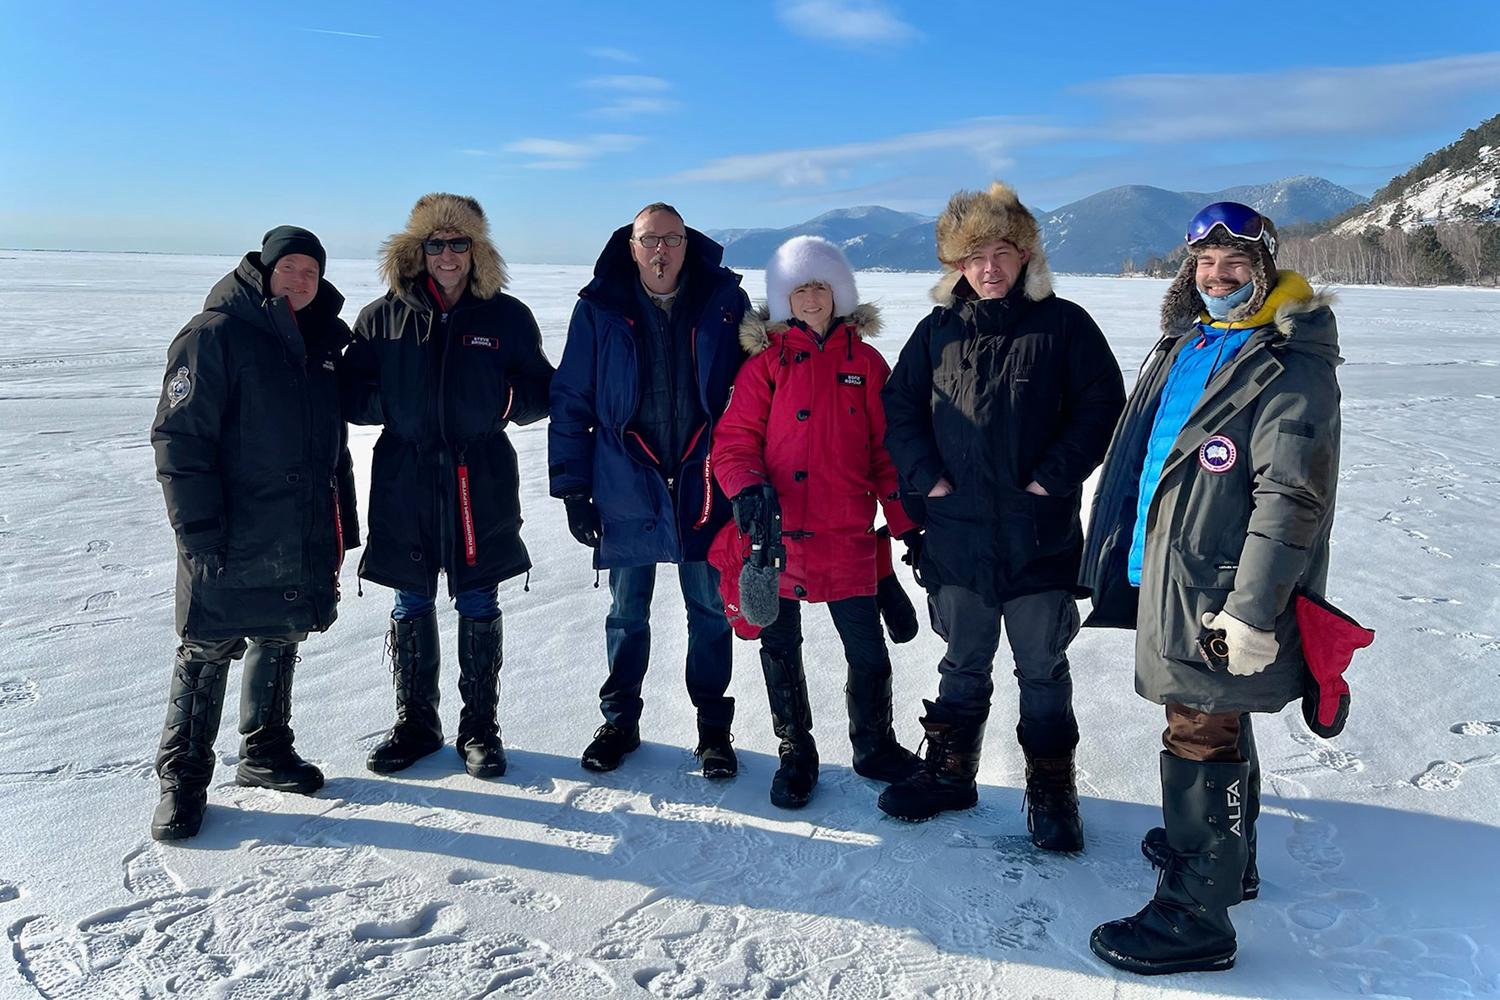 The DefenderX team on the frozen Lake Baikal in Russia, including Mikael Strandberg, Steve Brooks, Jeff Willner, Sofie Rørdam, Edward Adrian-Vallance and Misha Vikhrov.